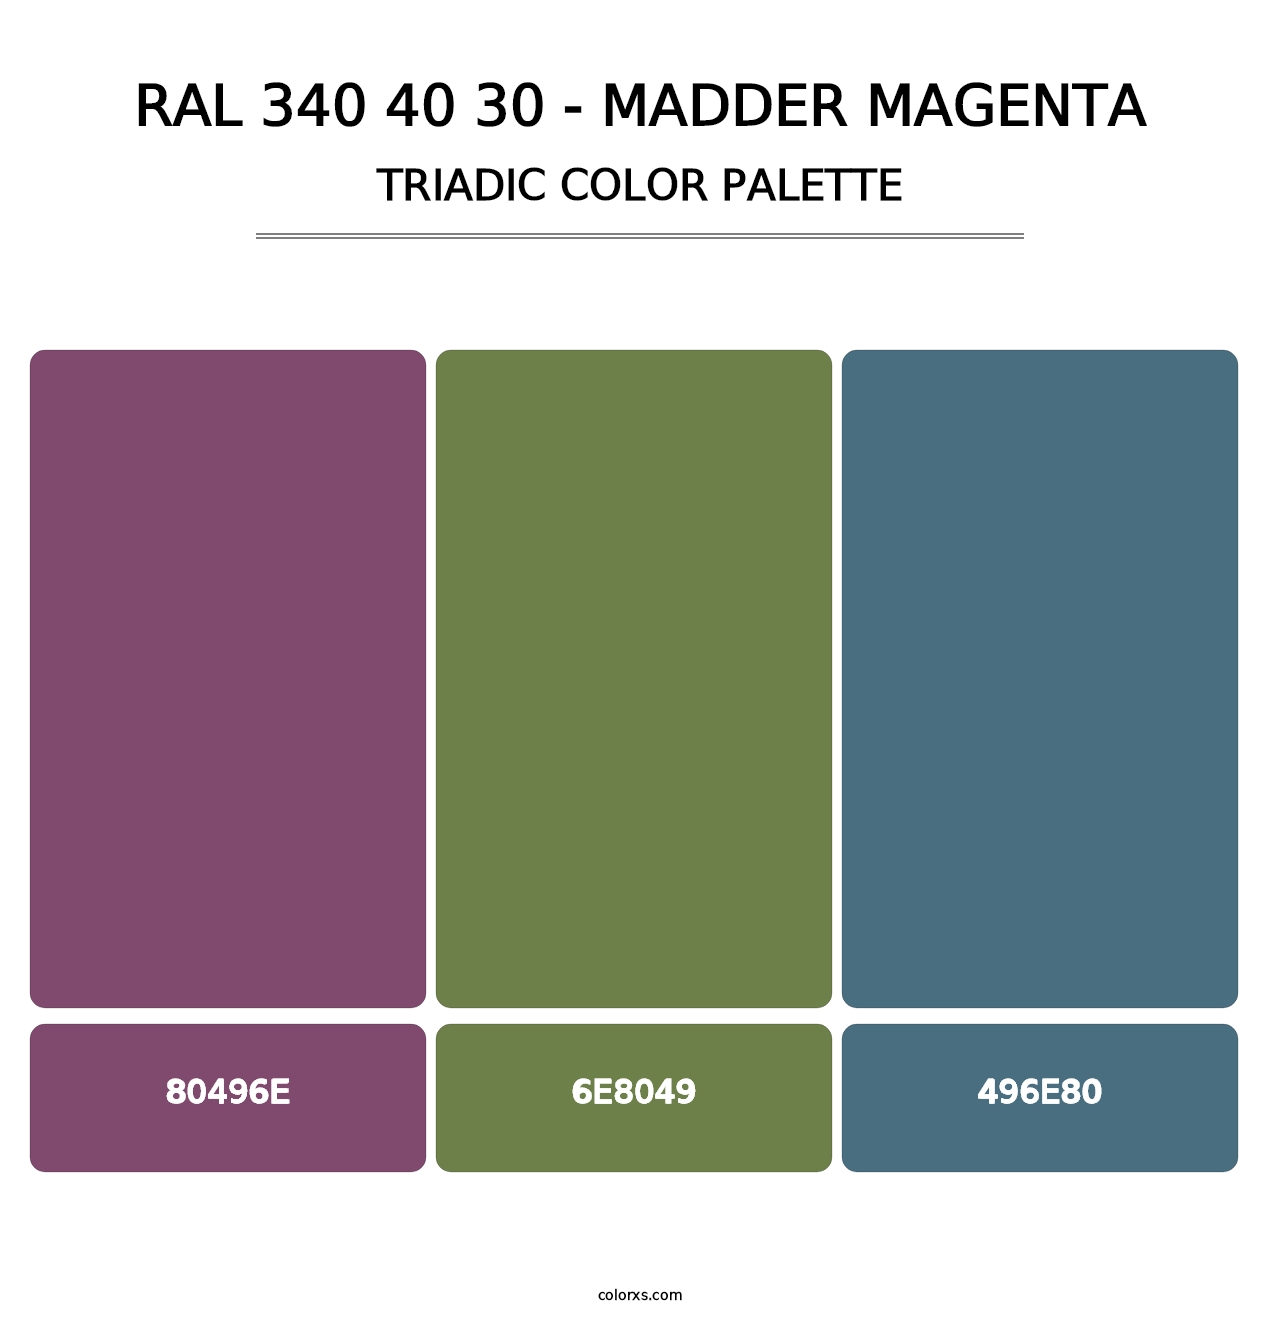 RAL 340 40 30 - Madder Magenta - Triadic Color Palette